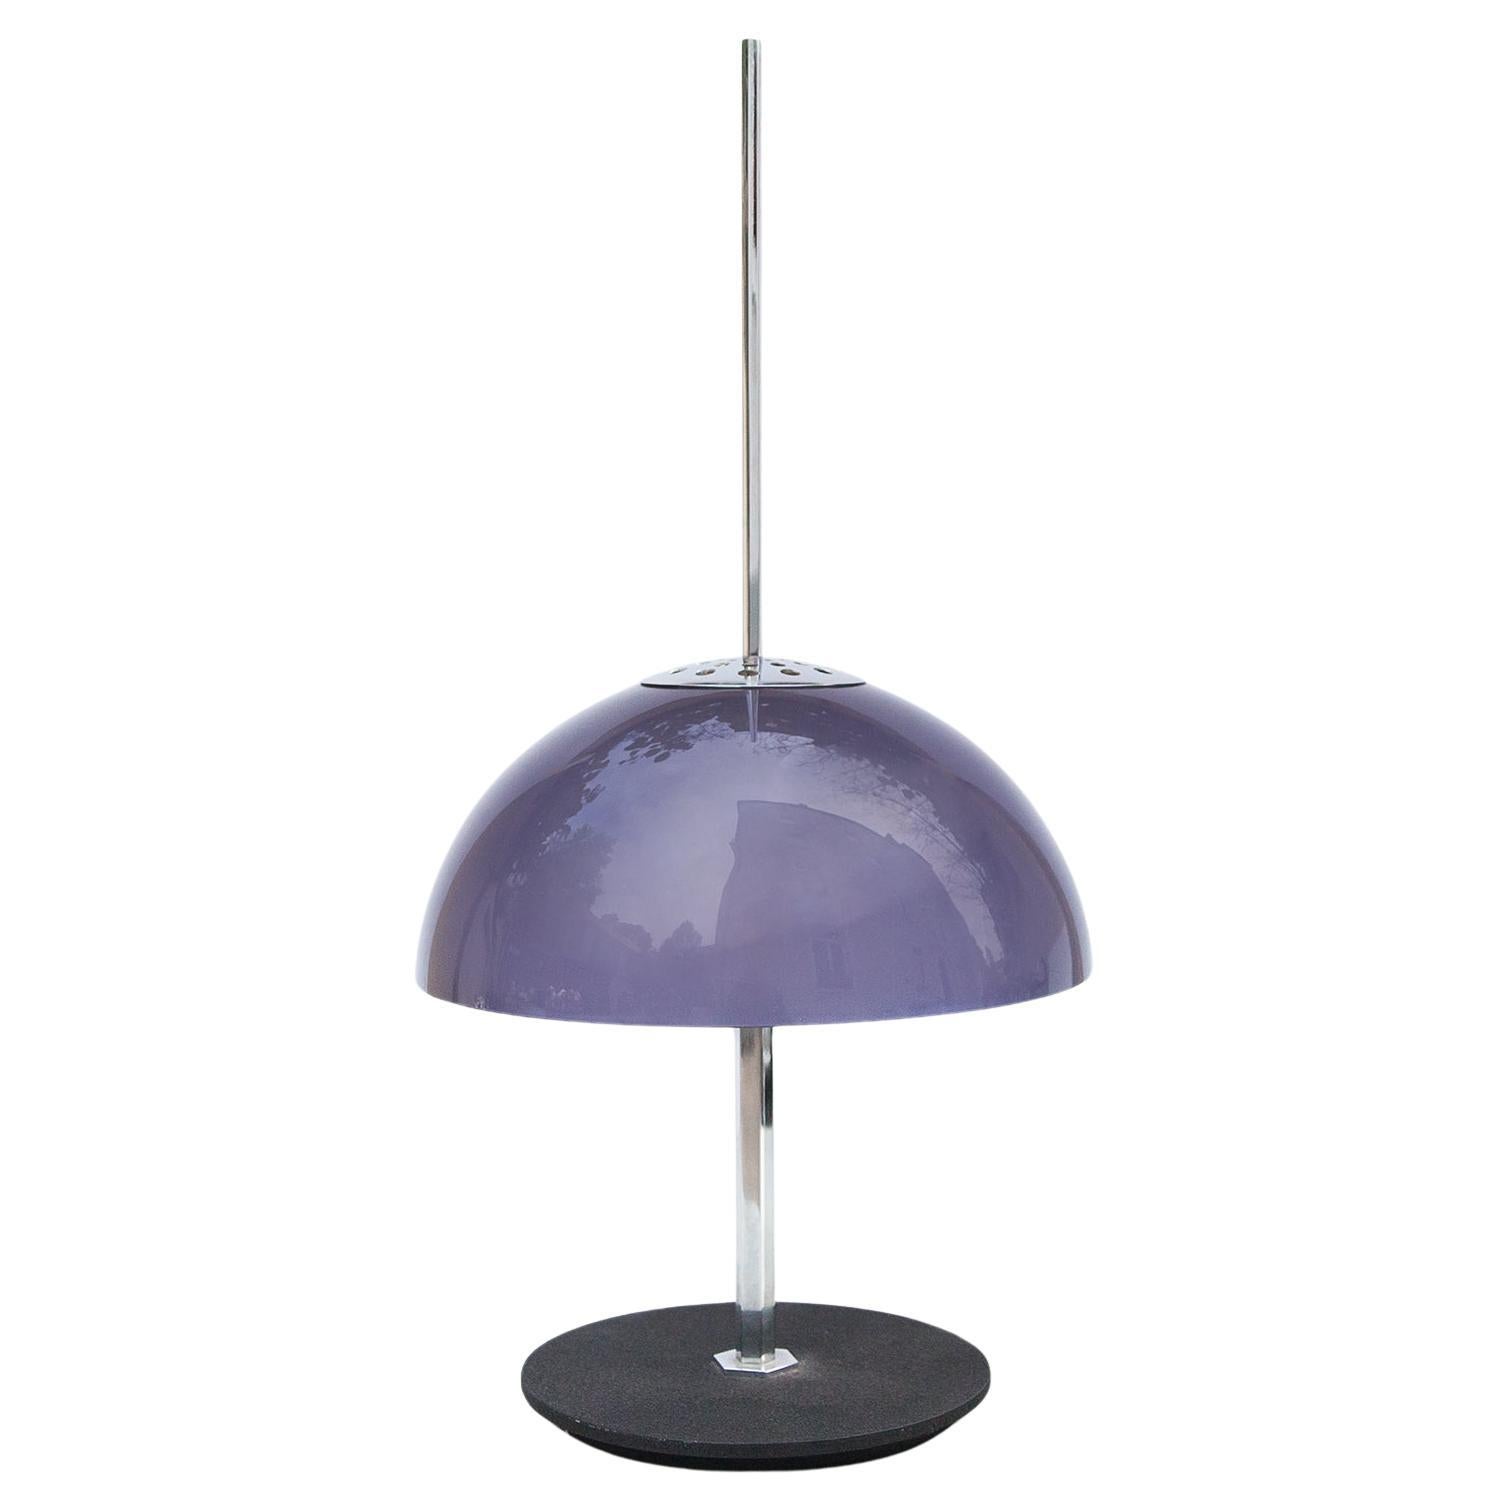 Gino Sarfatti Table Lamp N584p for Arteluce Italy 1957 Original Label